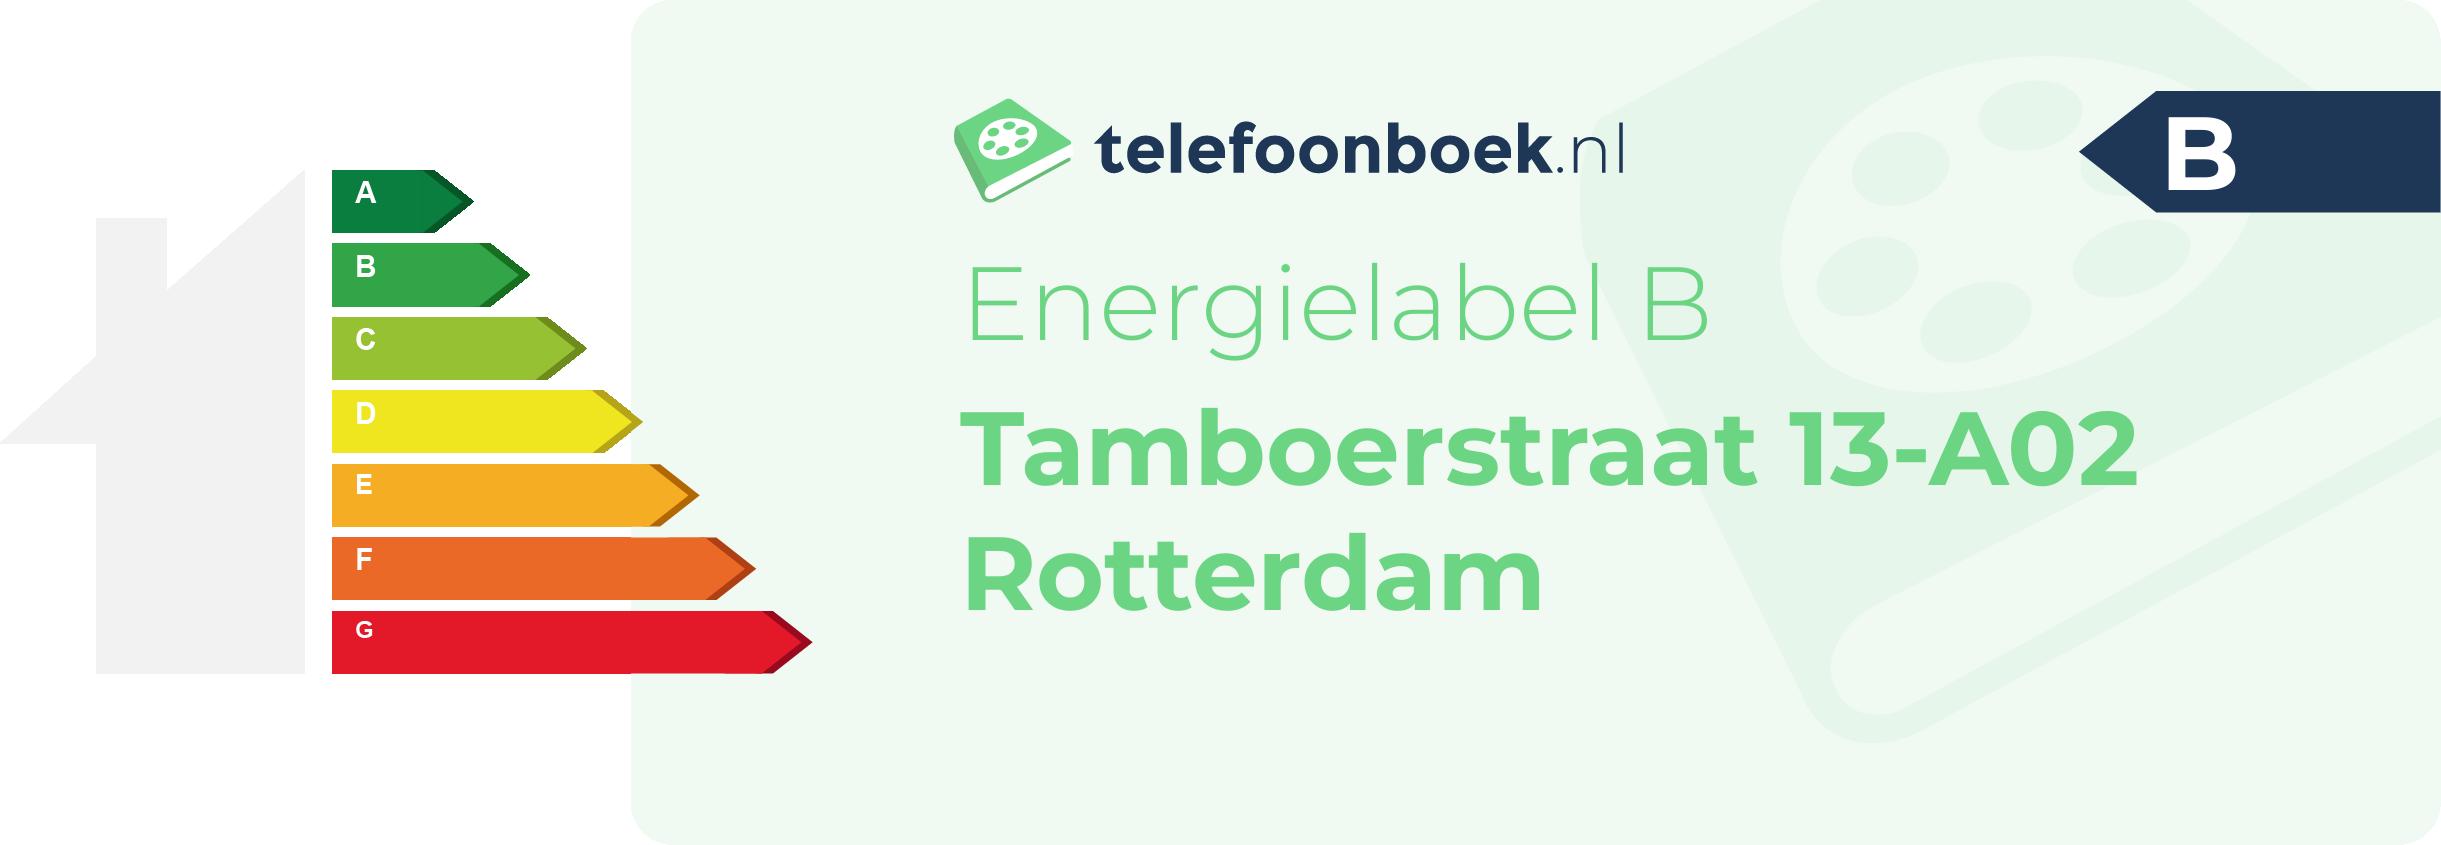 Energielabel Tamboerstraat 13-A02 Rotterdam